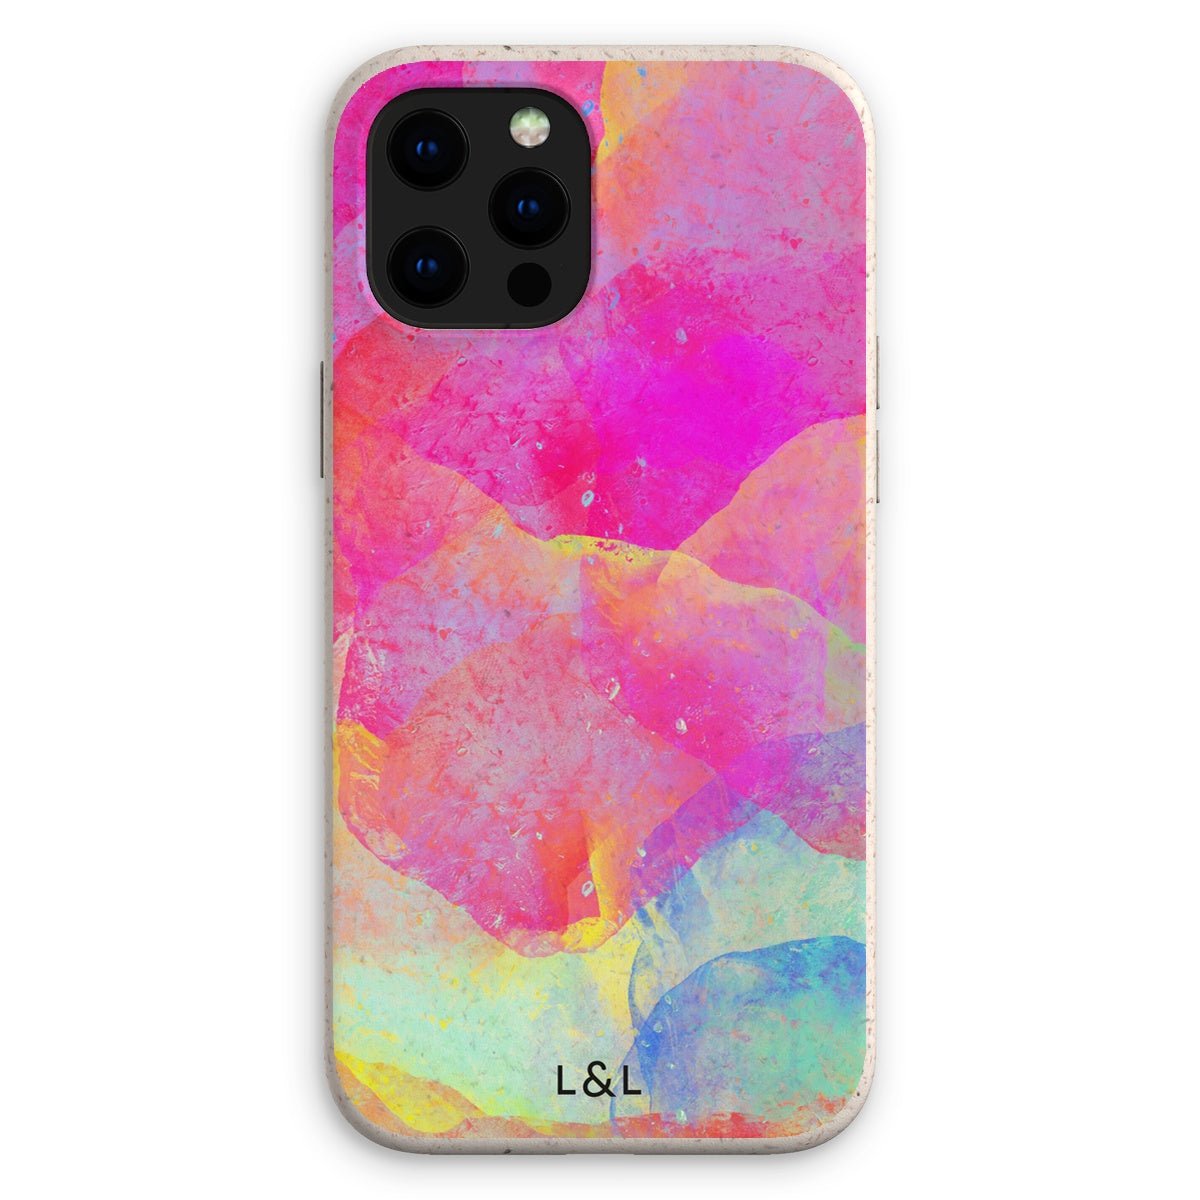 Neon Paint Eco Phone Case - Loam & Lore